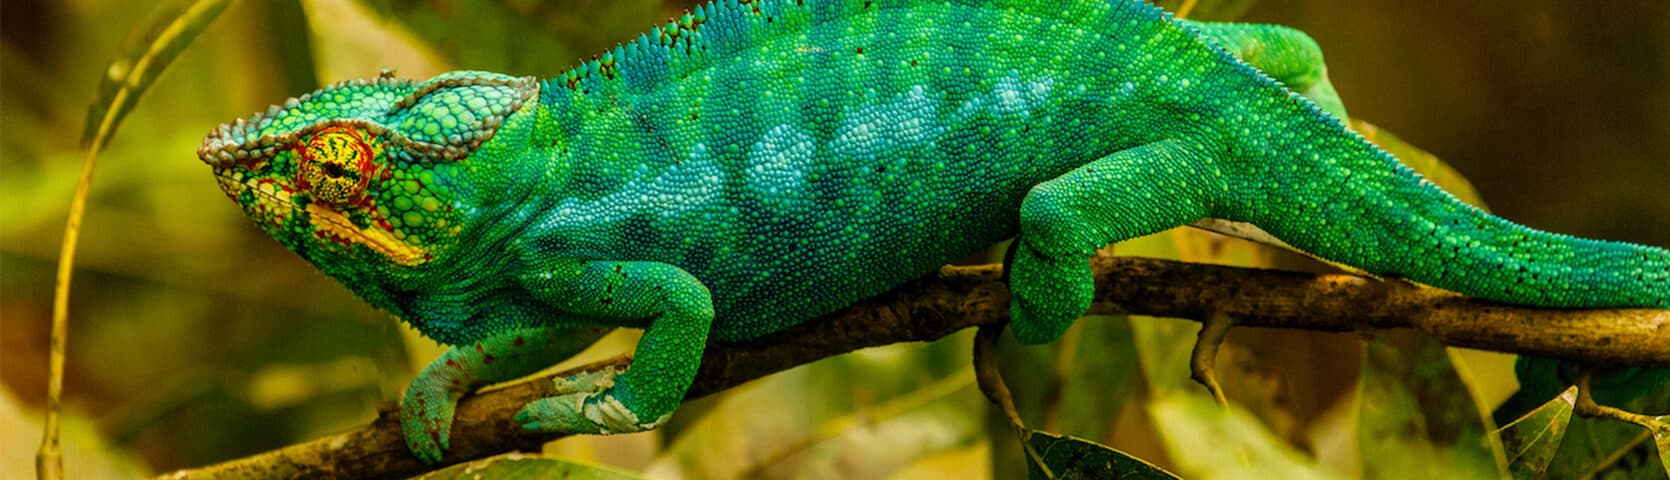 10.02.23_Nosy Be, Madagascar_panther chameleon_Greg Watson